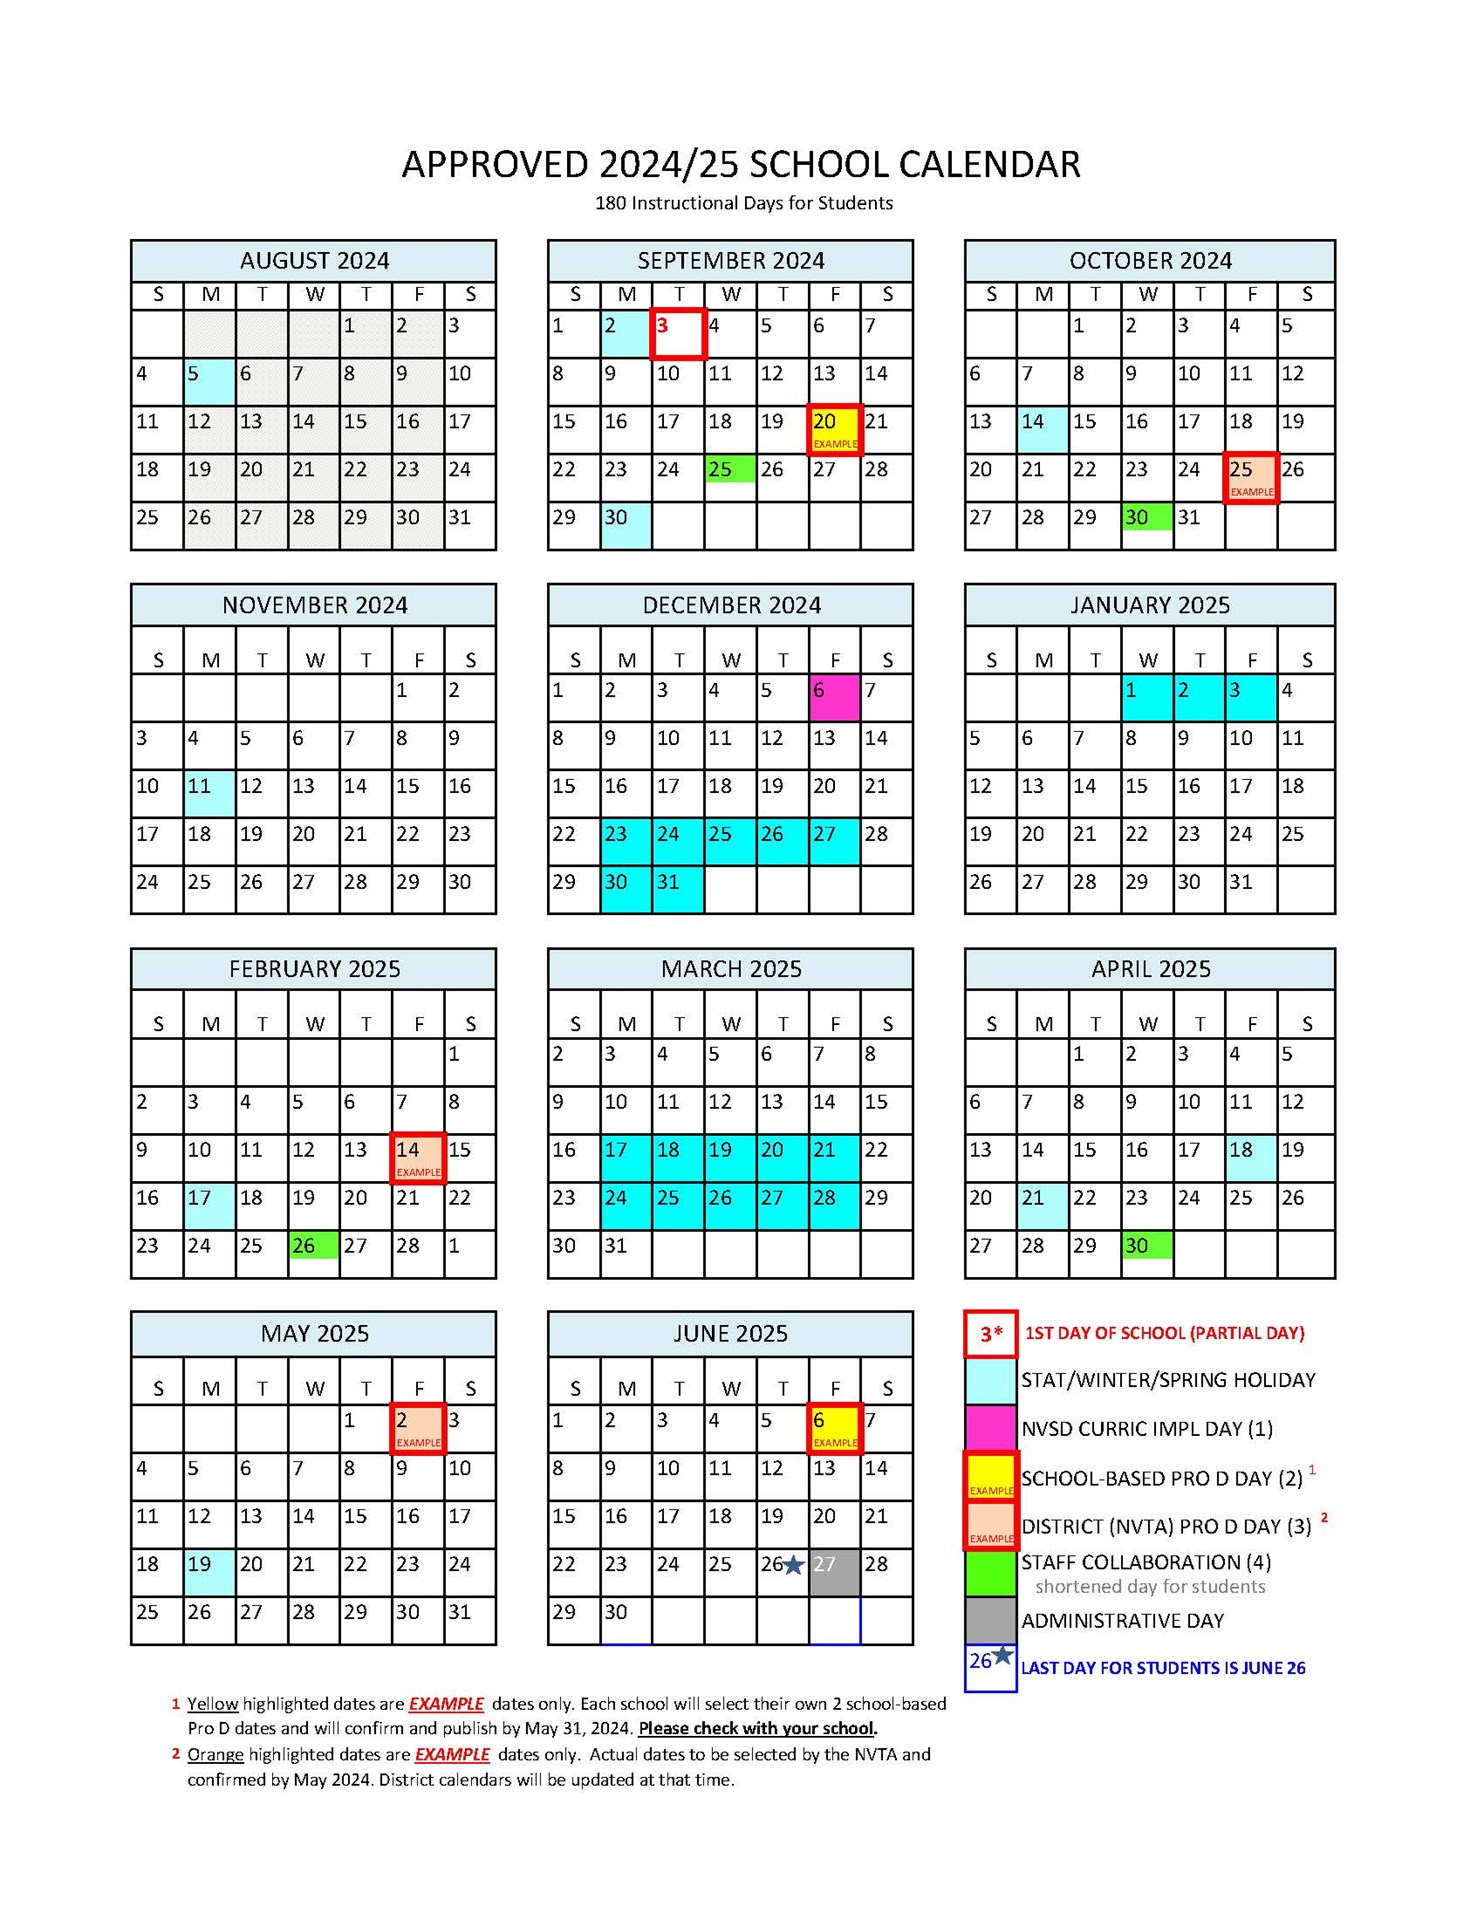 Approved 2024-25 School Calendar.jpg